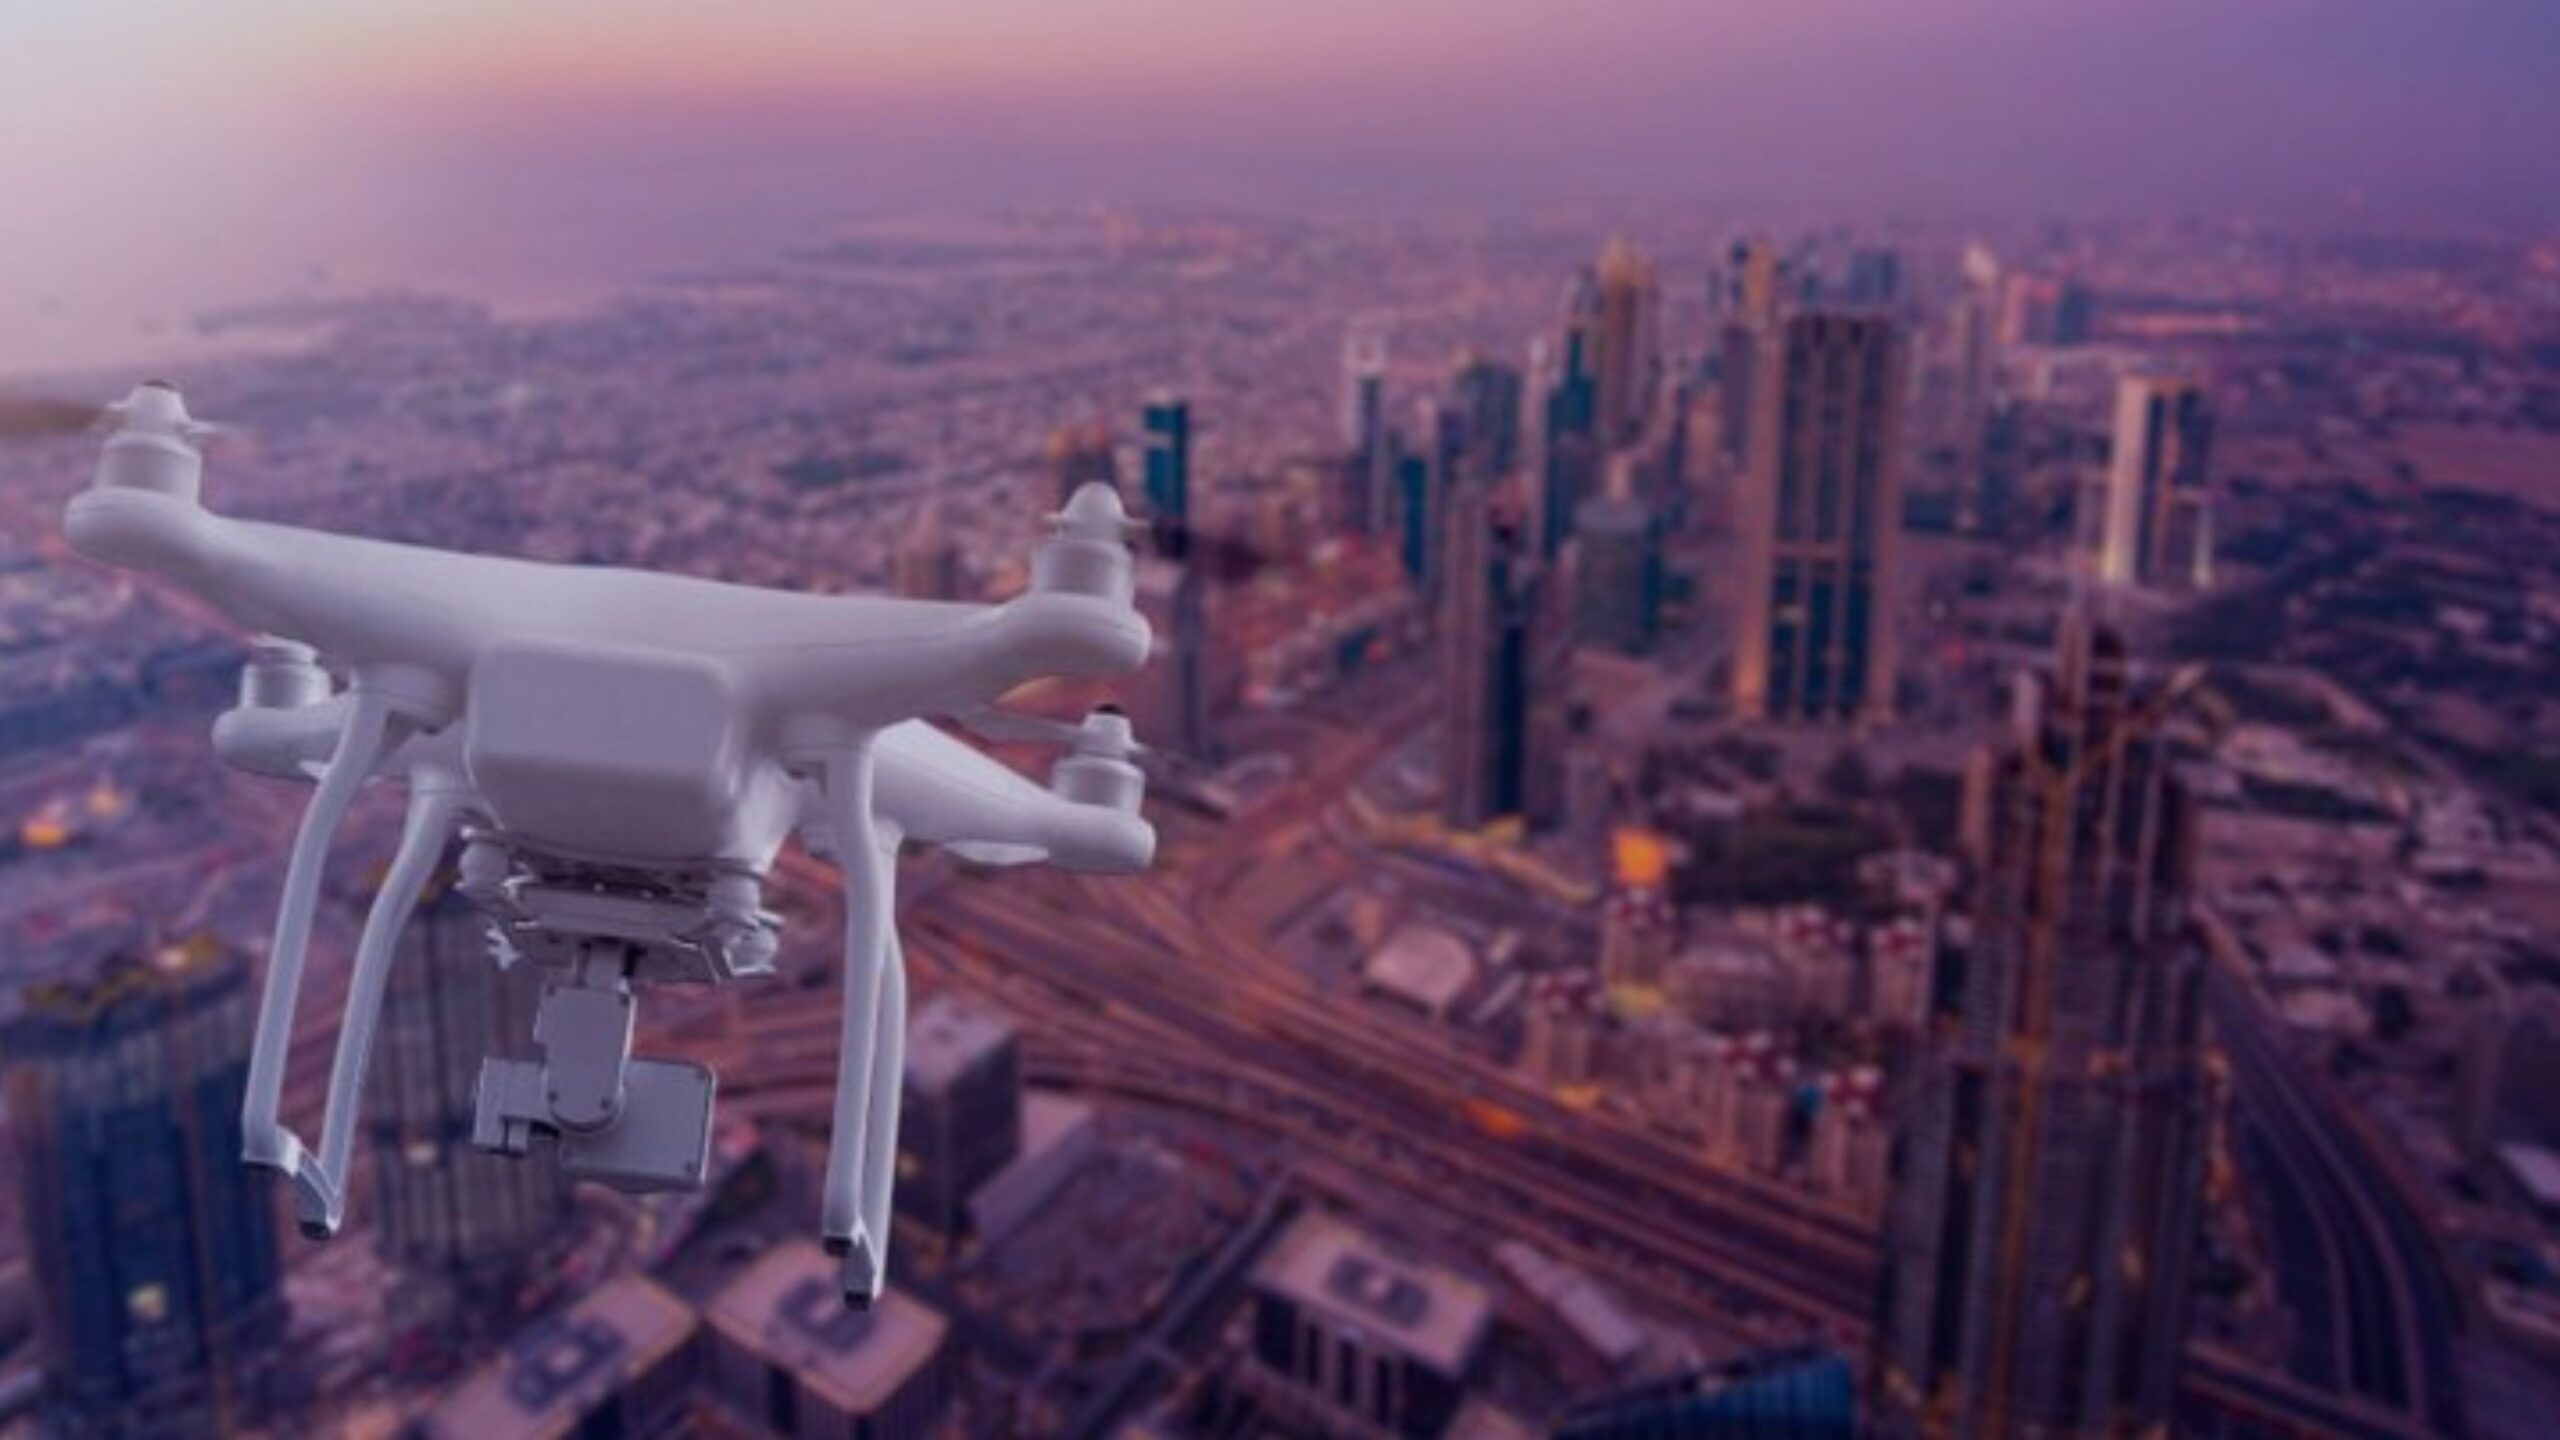  drone service fly in saudi arabia